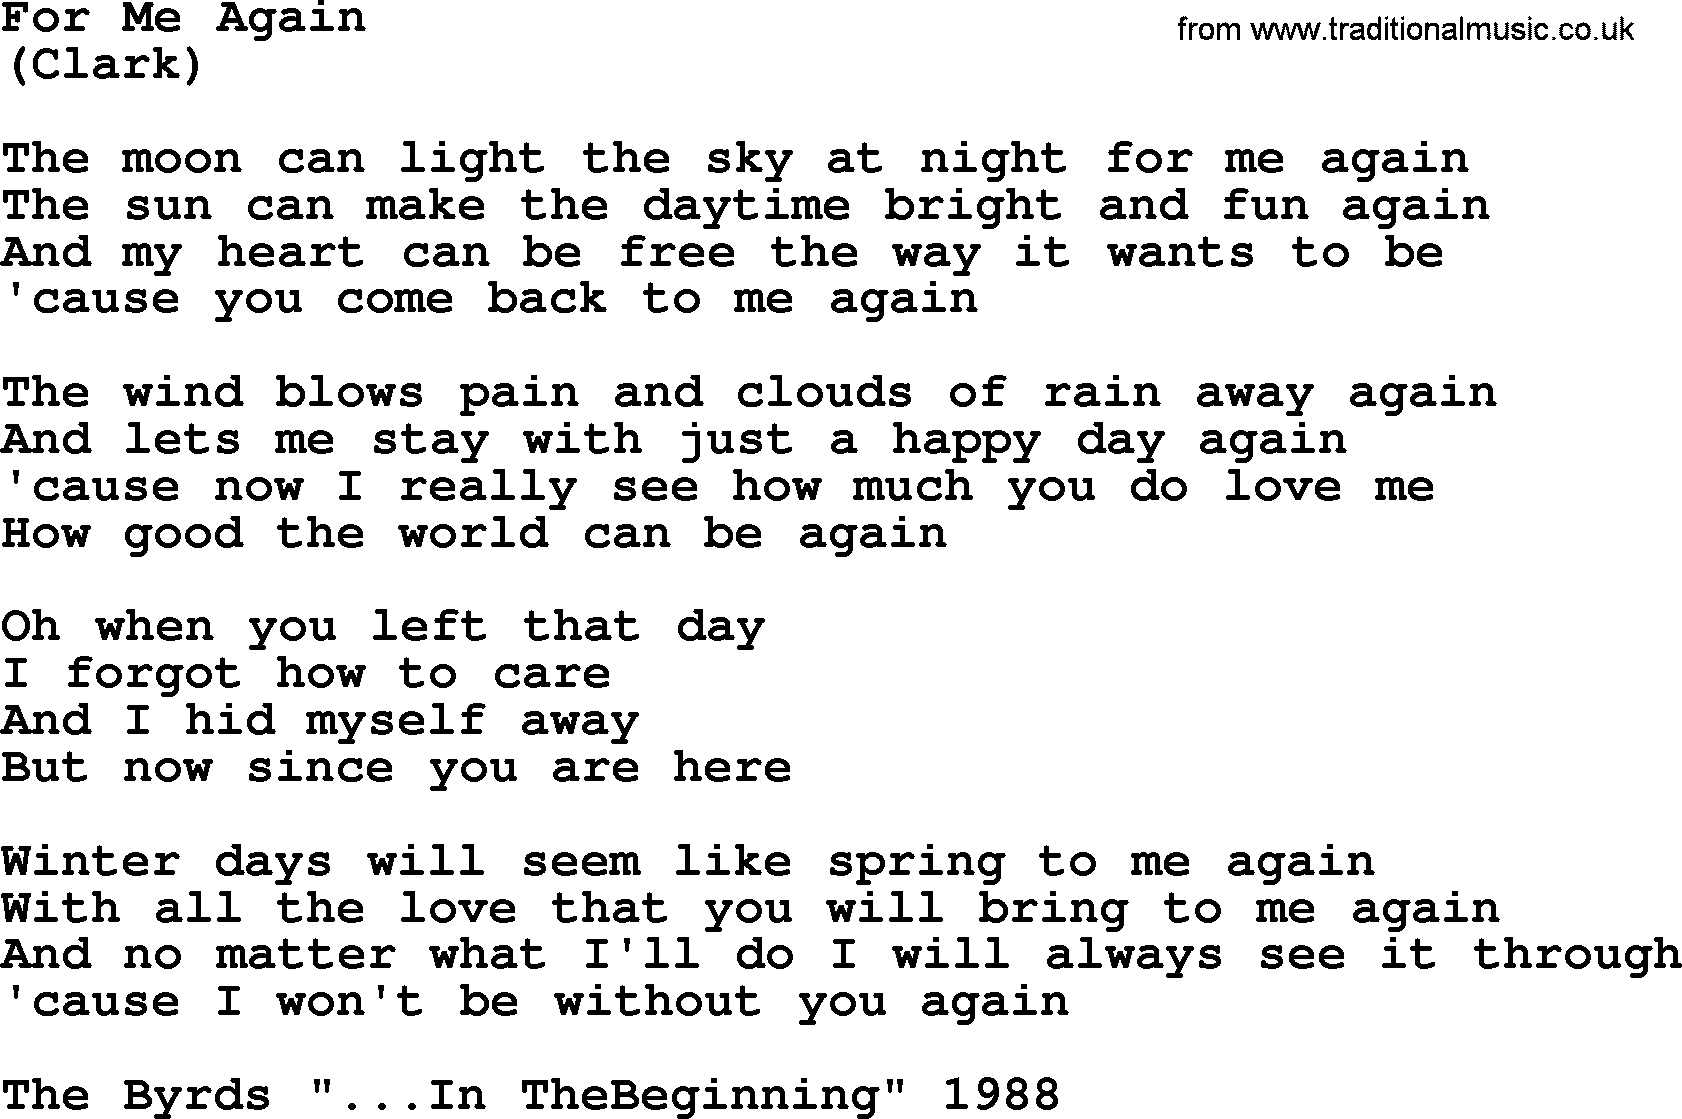 The Byrds song For Me Again, lyrics